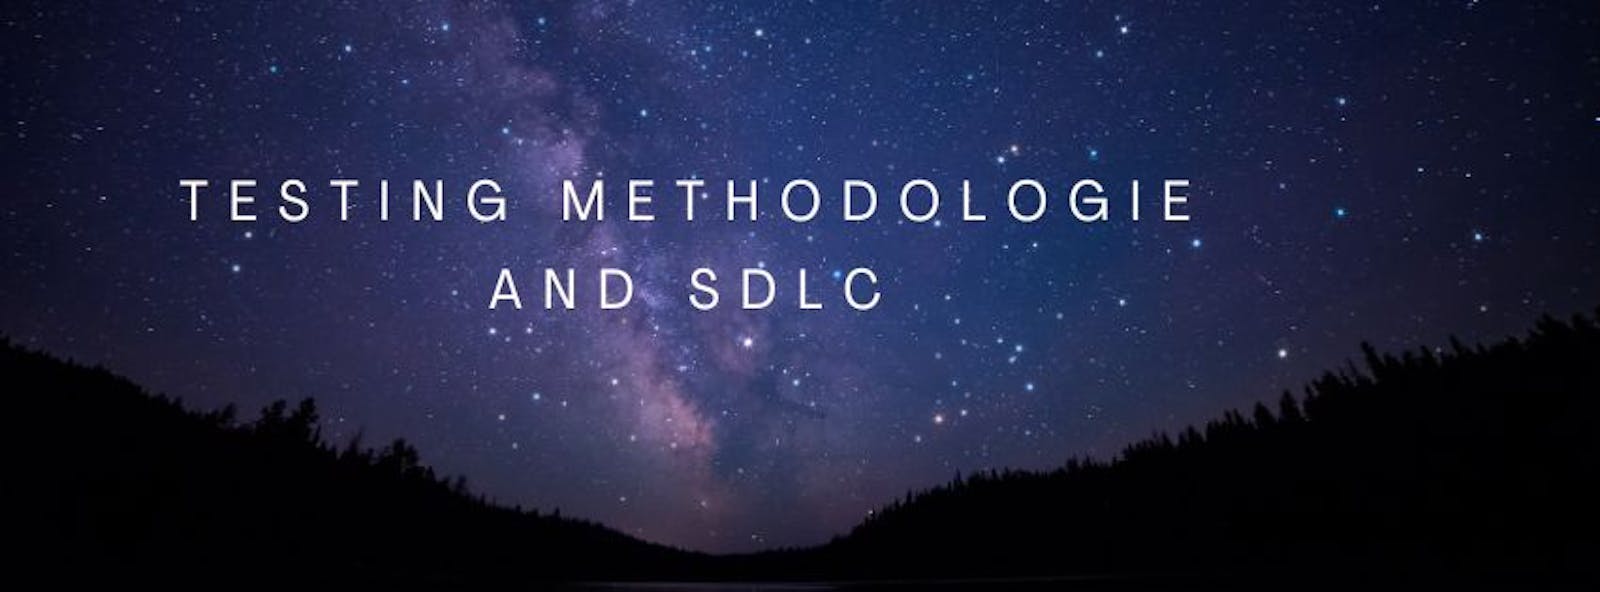 Task 1: Testing methodologies and SDLC